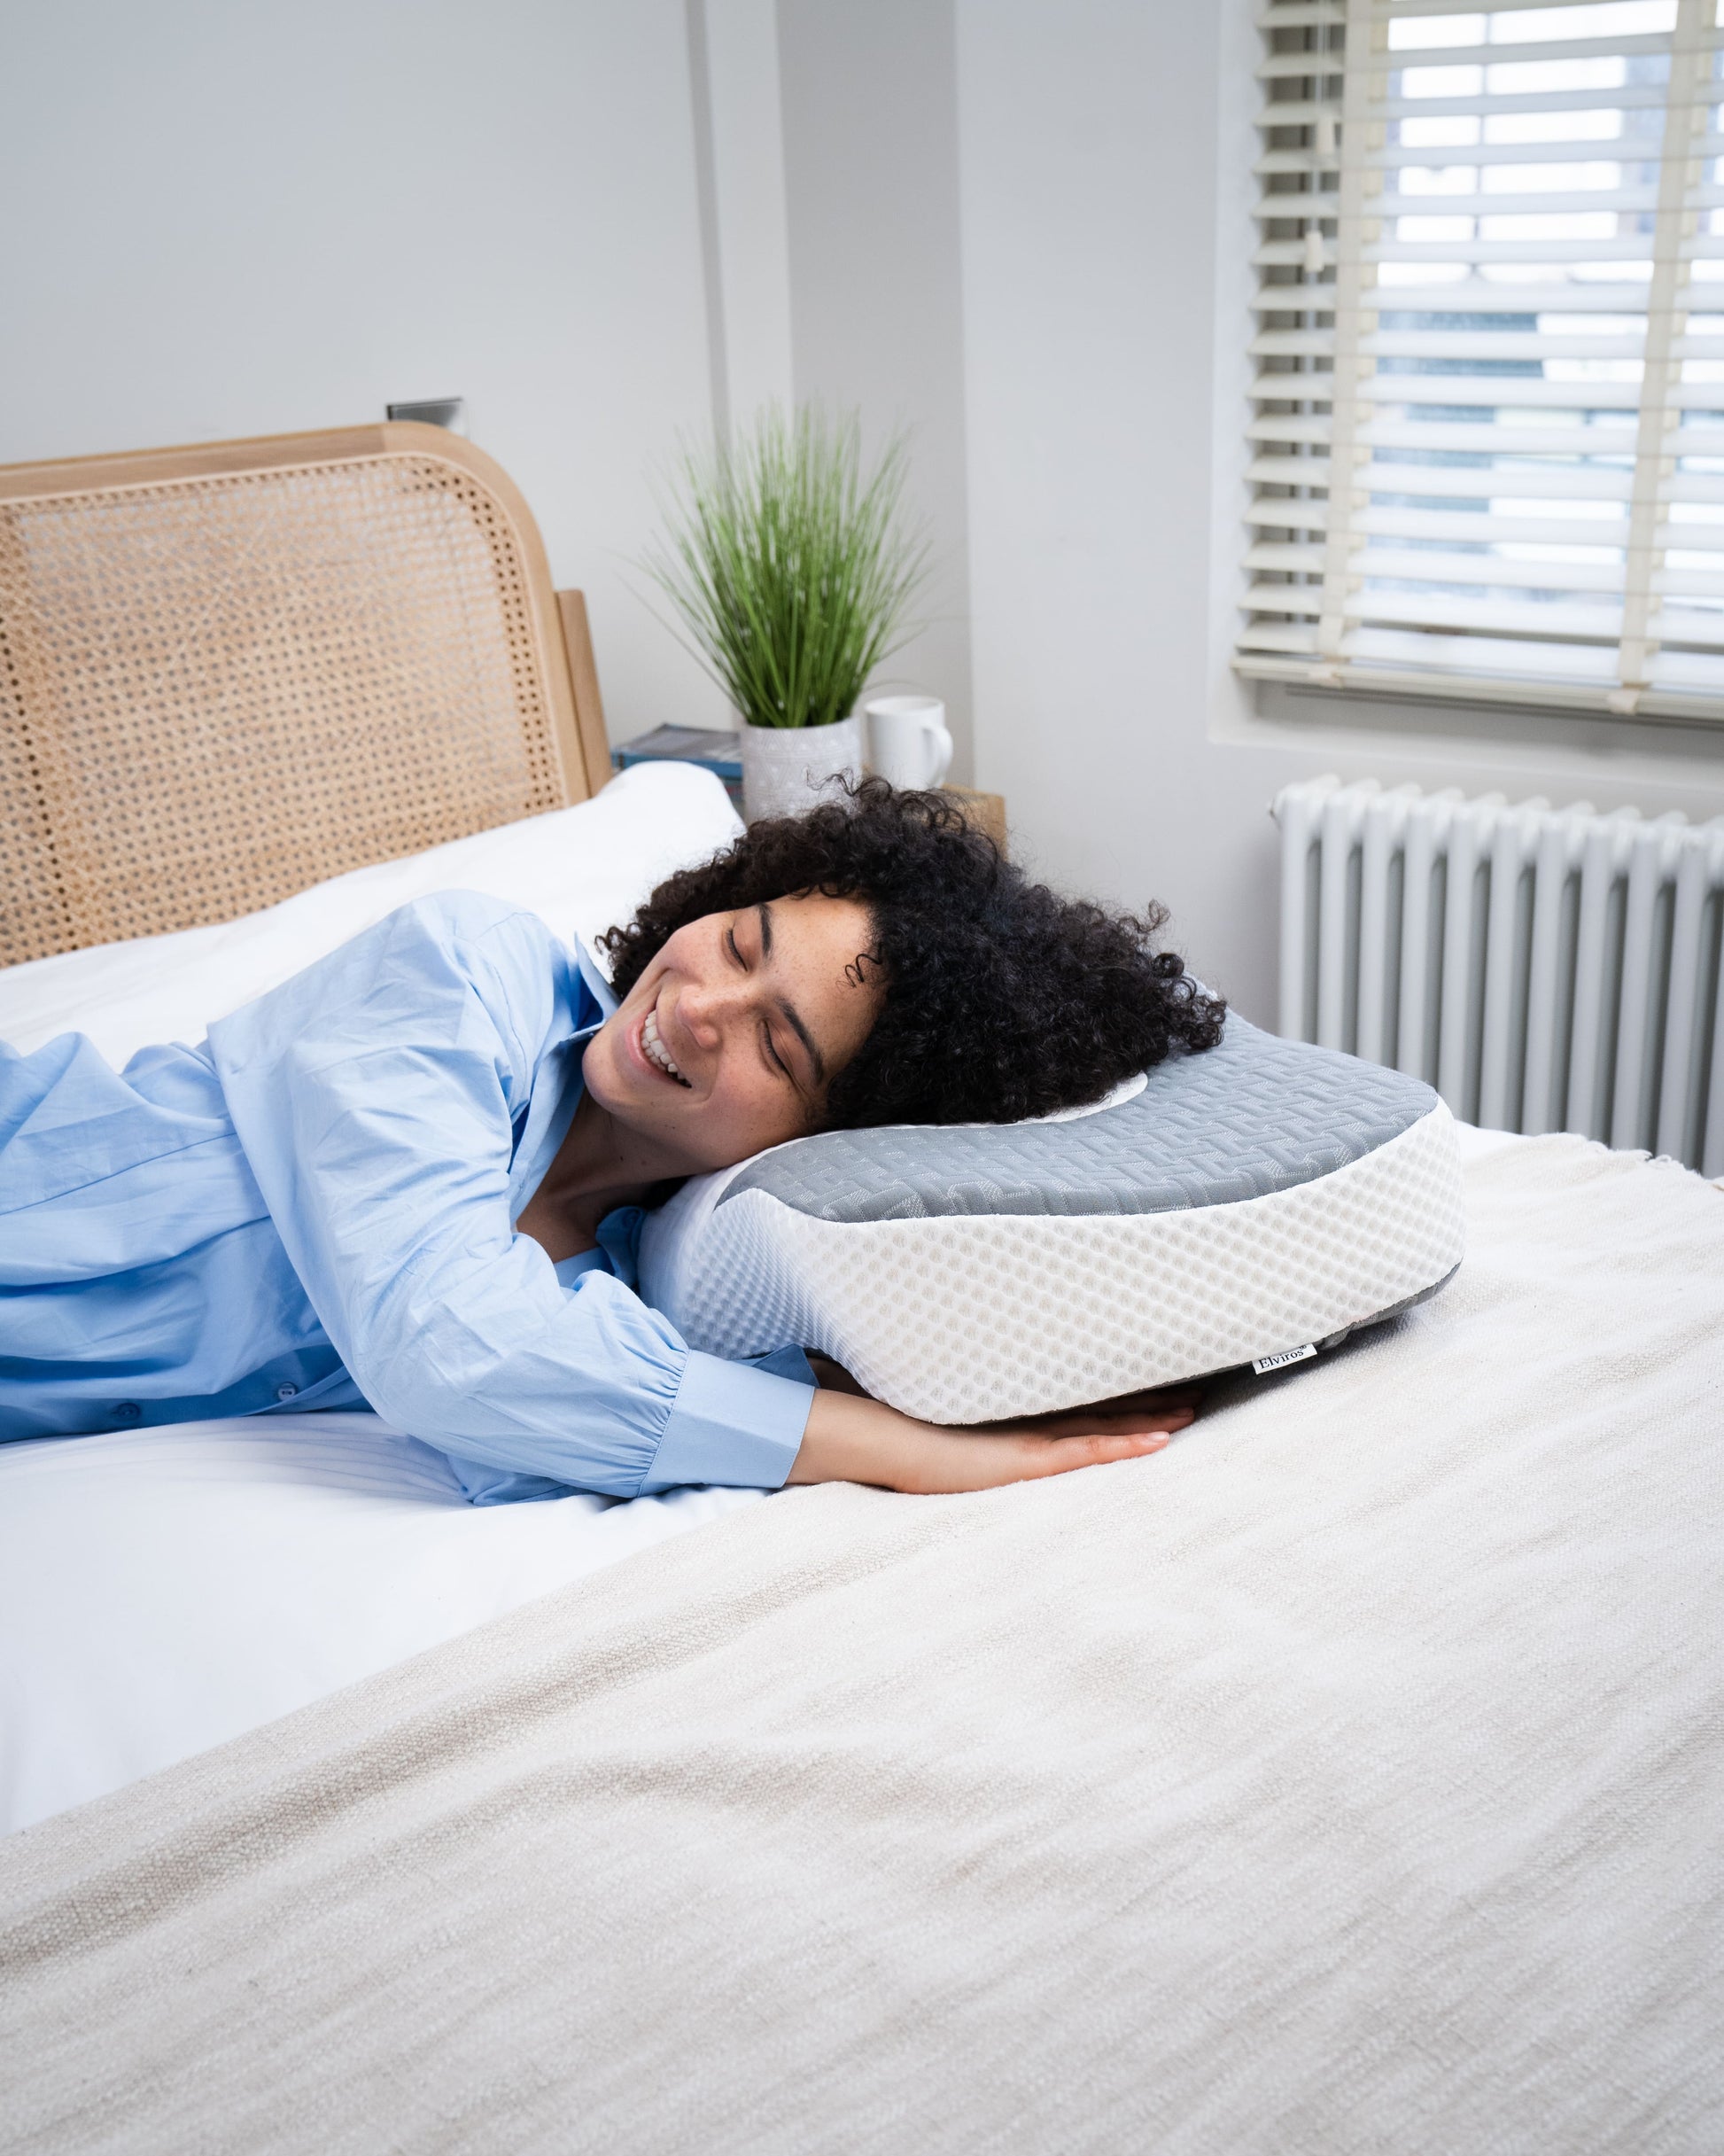  Elviros Lumbar Support Pillow for Sleeping, Adjustable